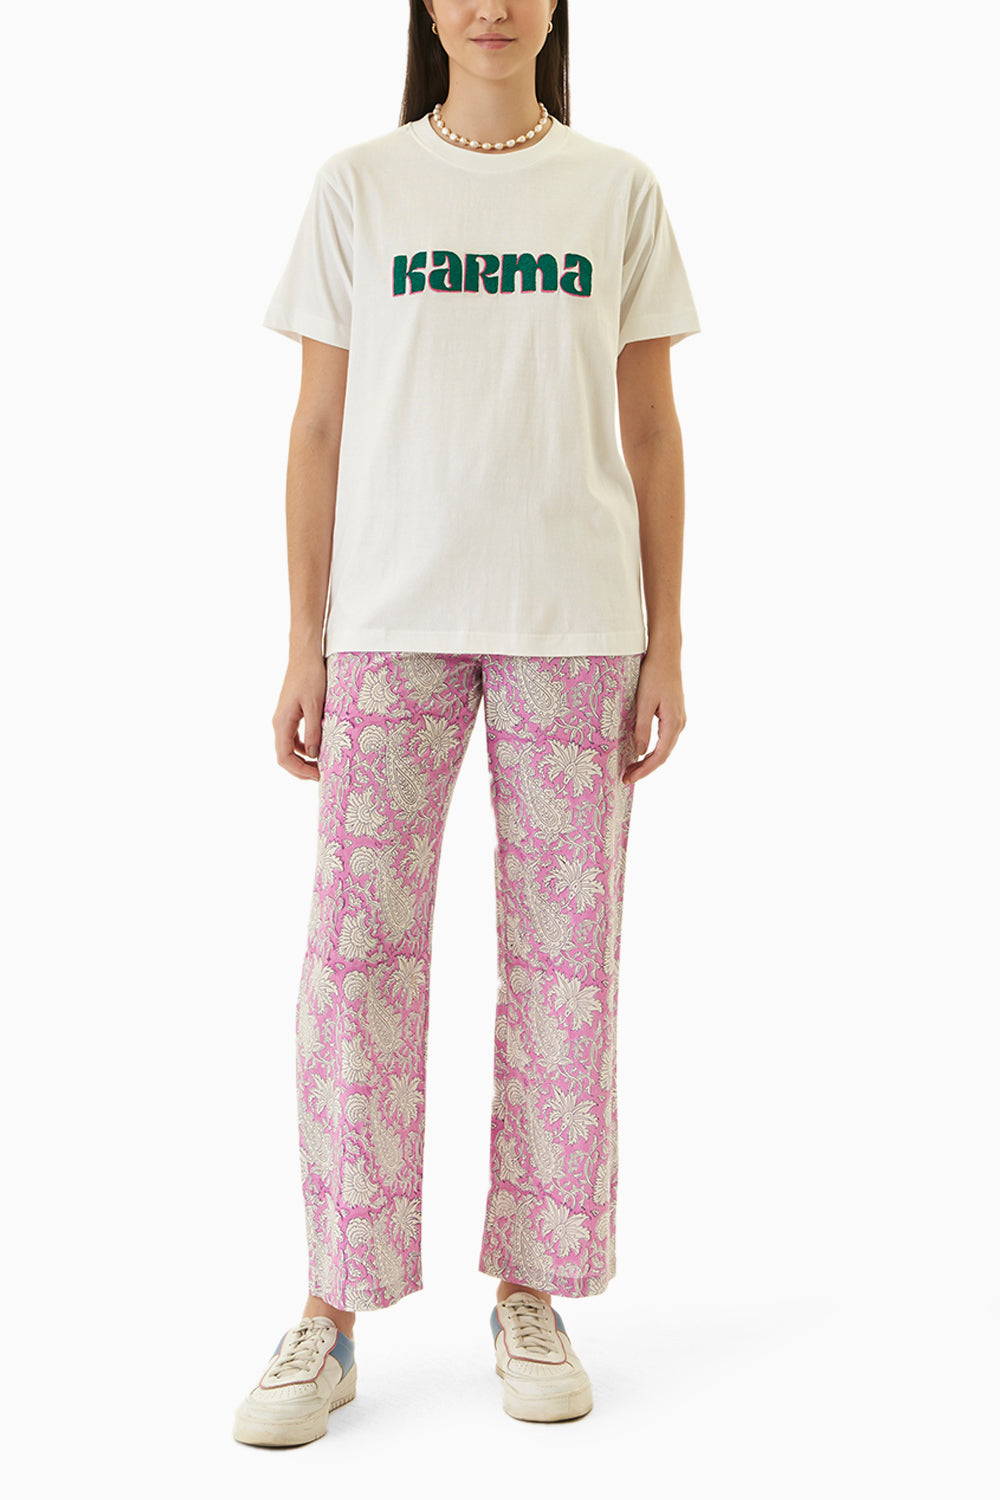 Karma Embroidered T-shirt